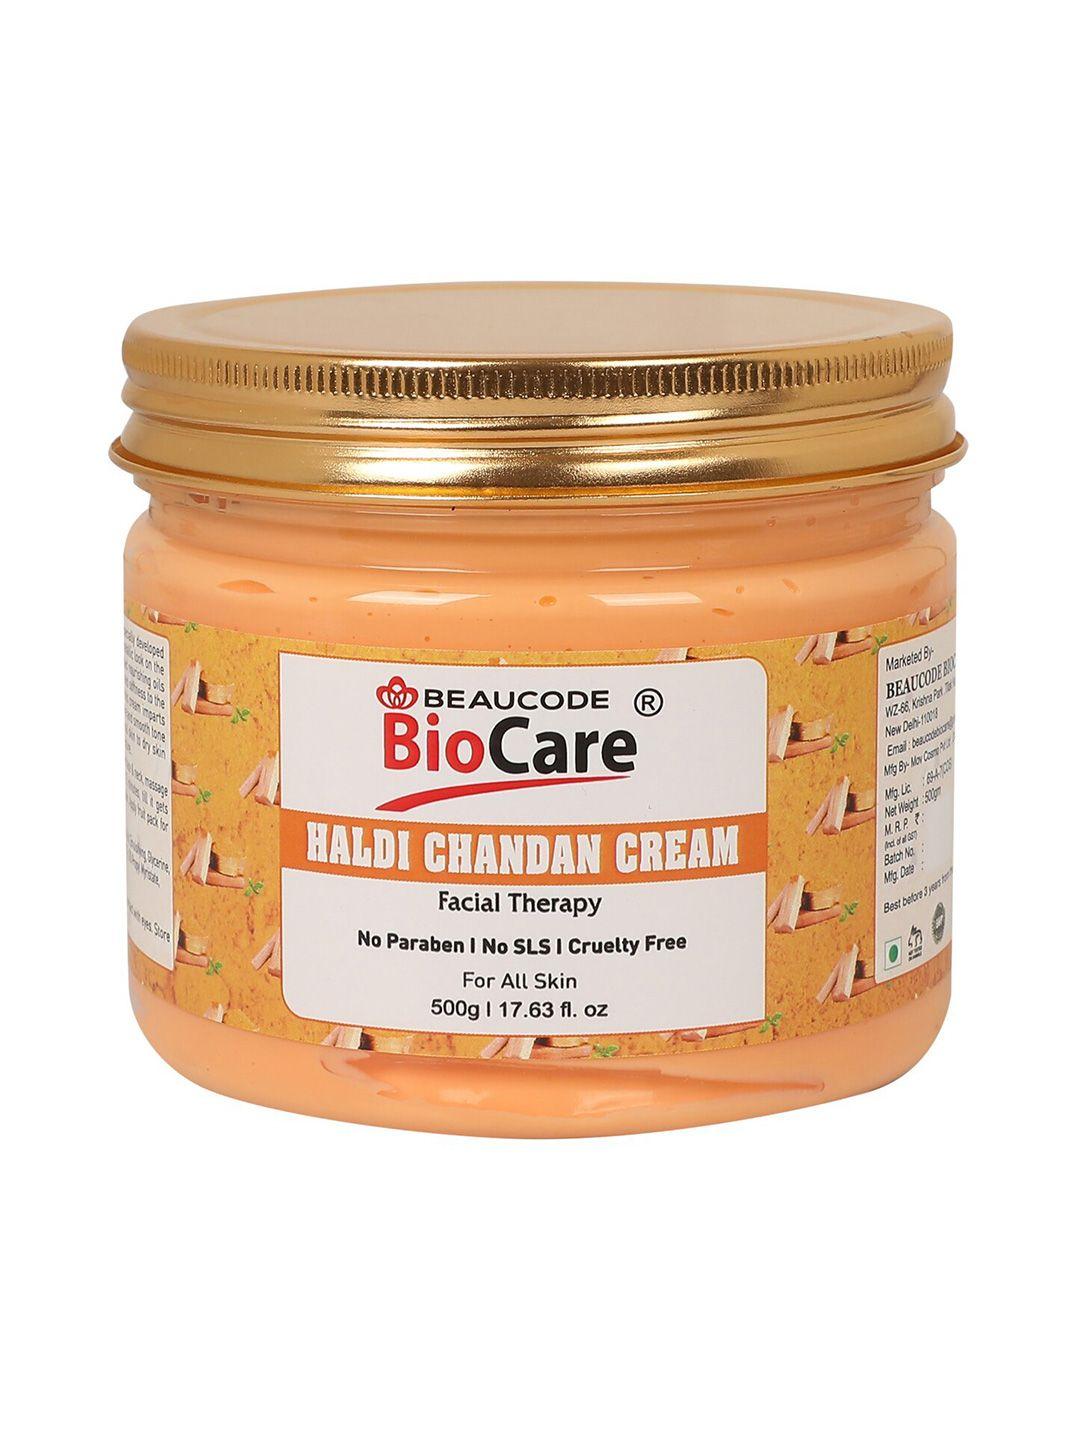 beaucode biocare haldi chandan cream for all skin types - 500 g